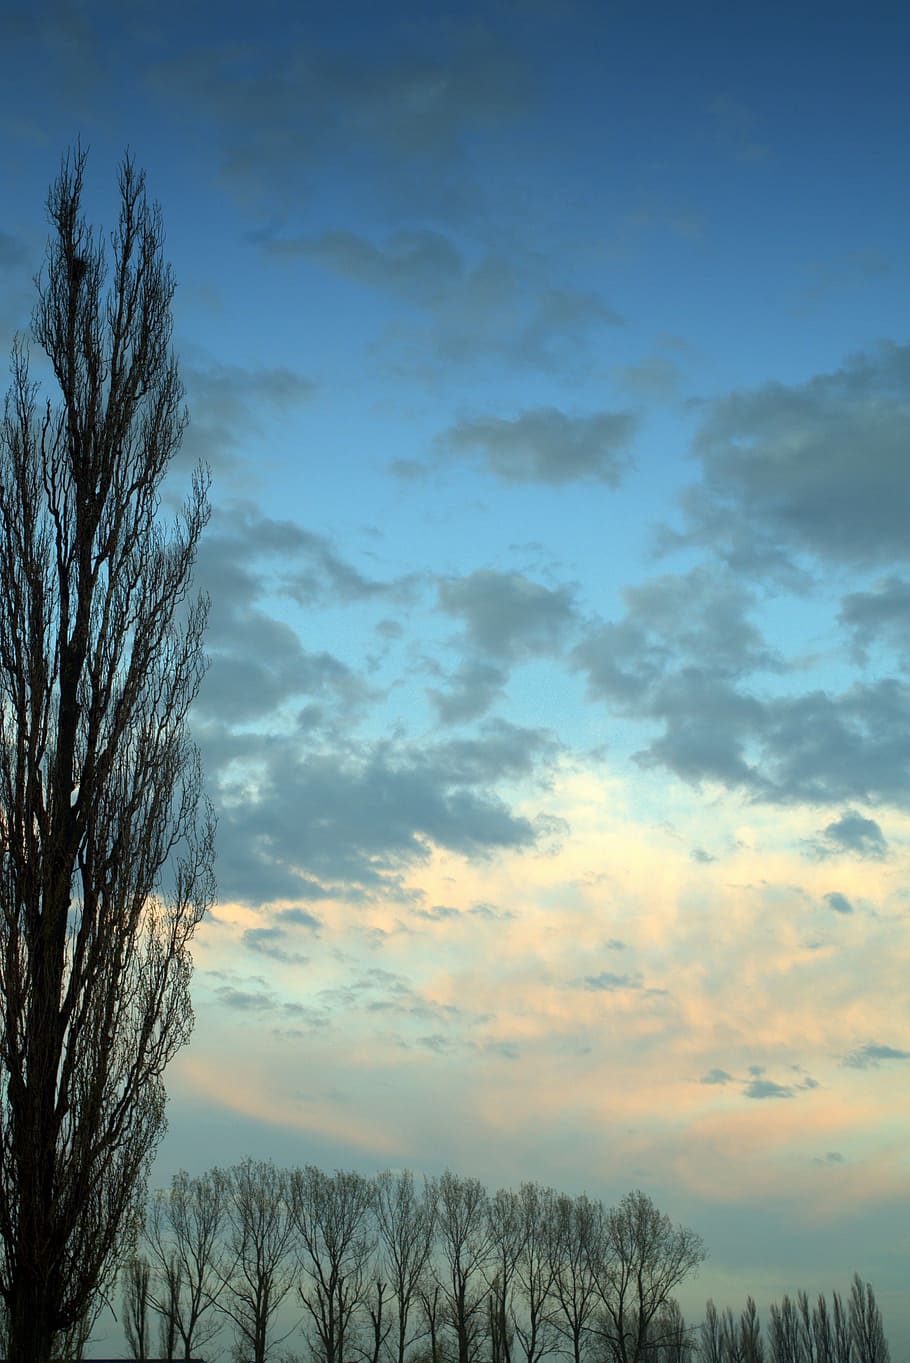 West, Poplar, Clouds, Cloud, sky, blue, white, tree, evening, panorama